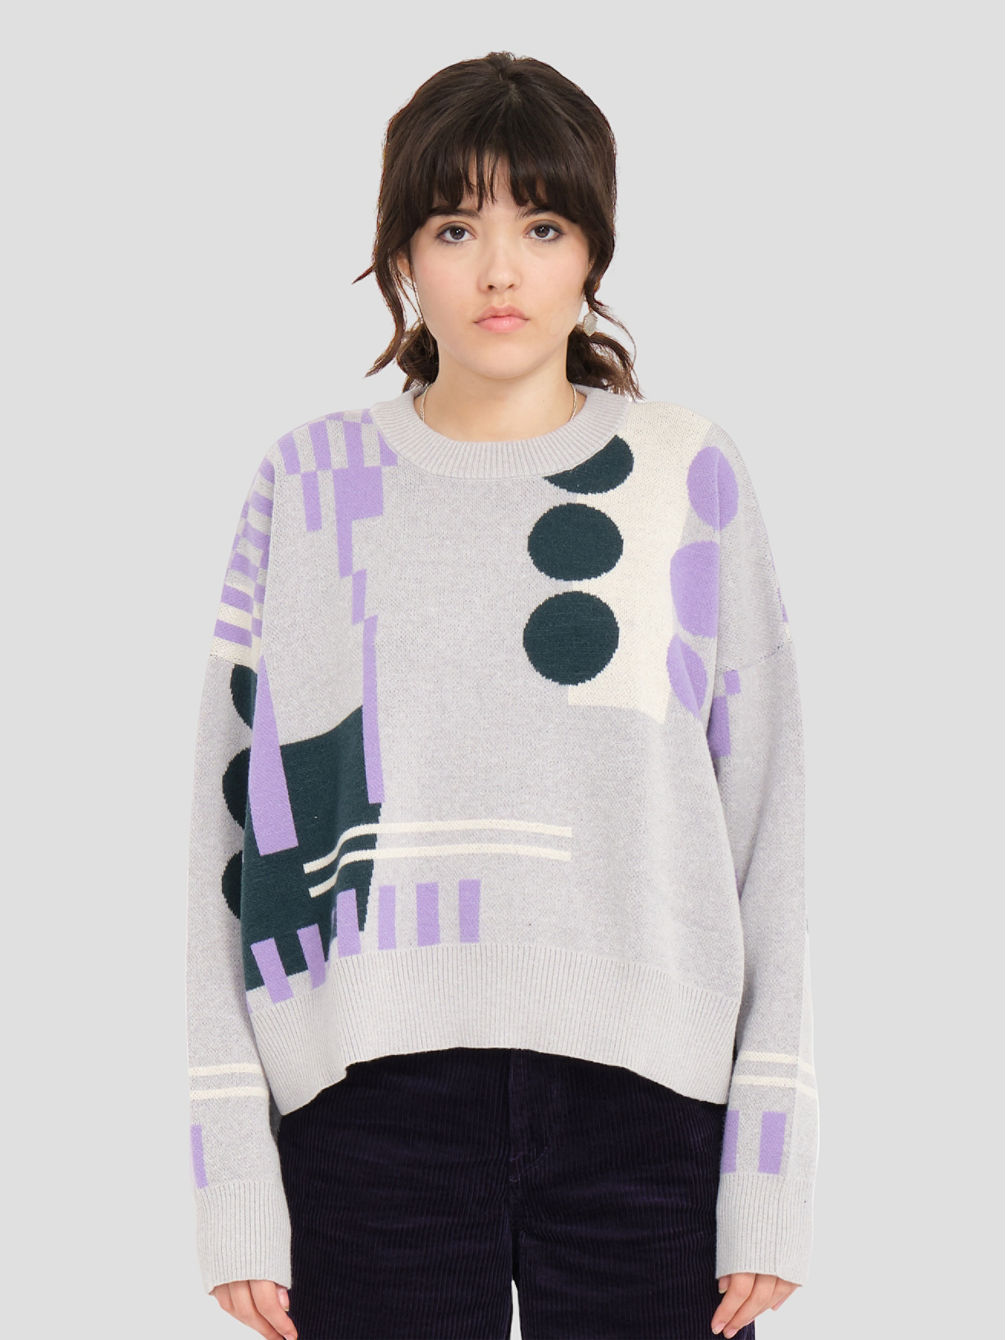 Bohausweater Strikket genser